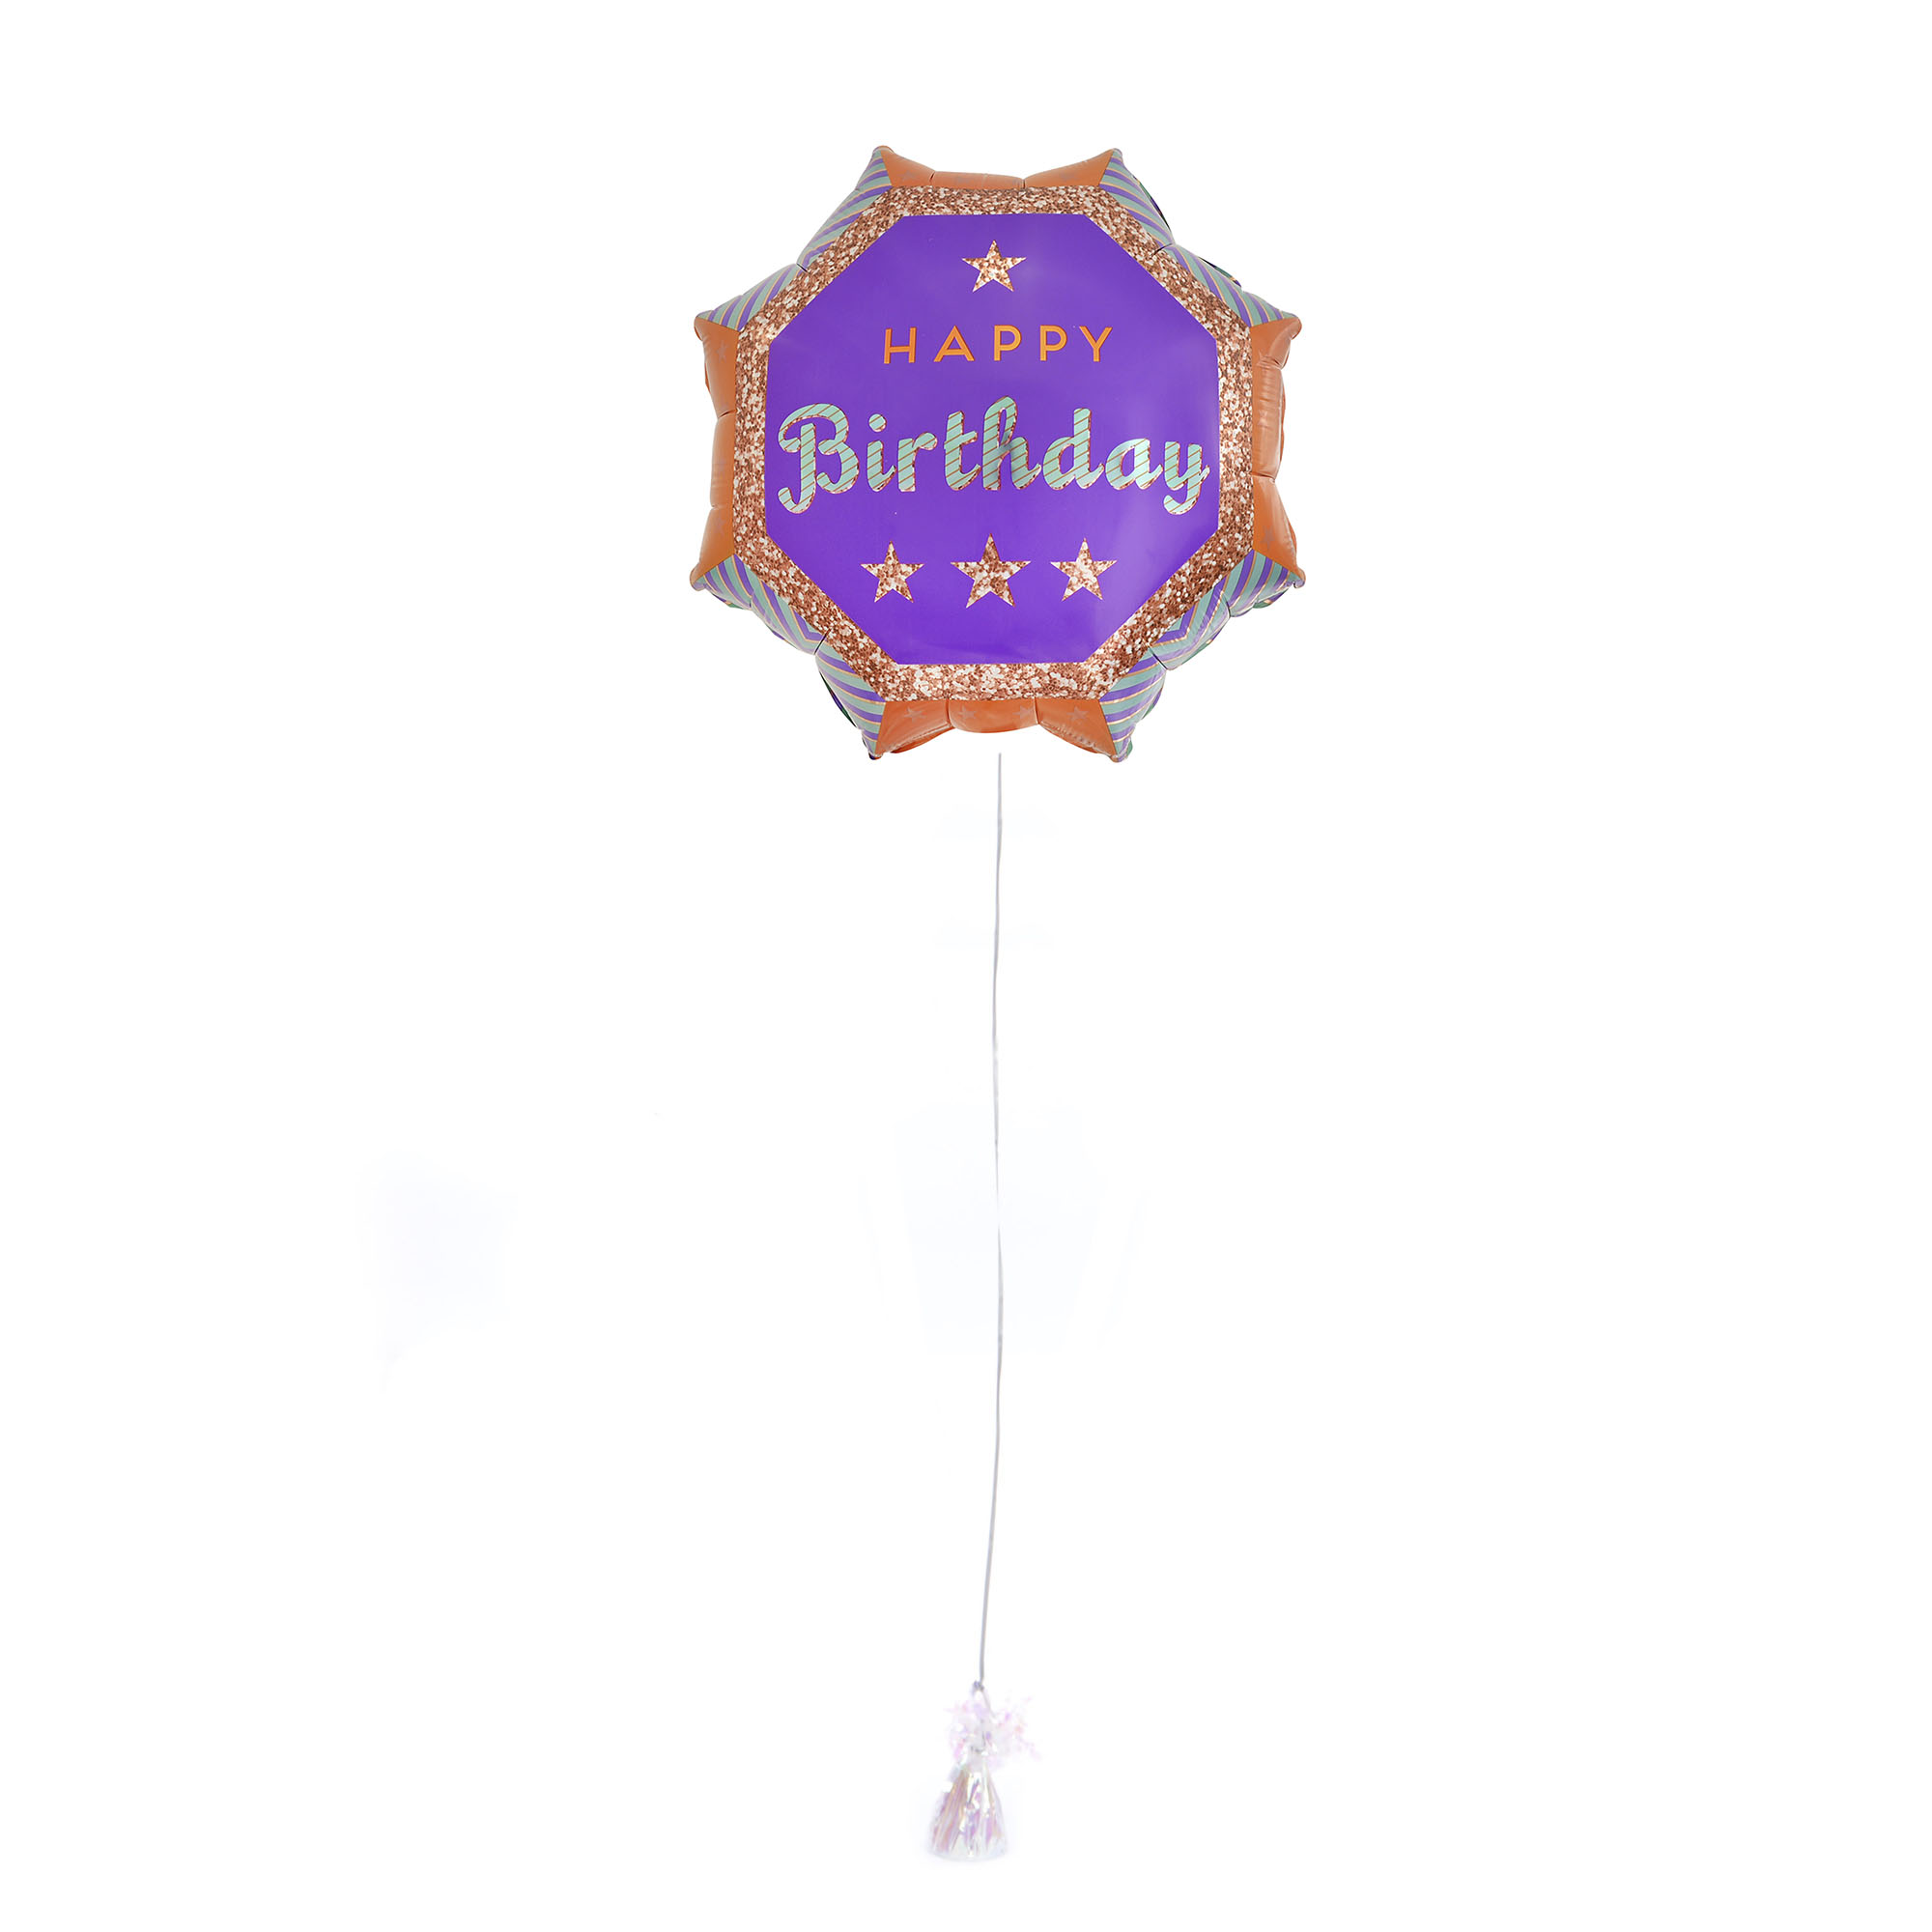 Octagon Happy Birthday Balloon & Lindt Chocolates - FREE GIFT CARD!